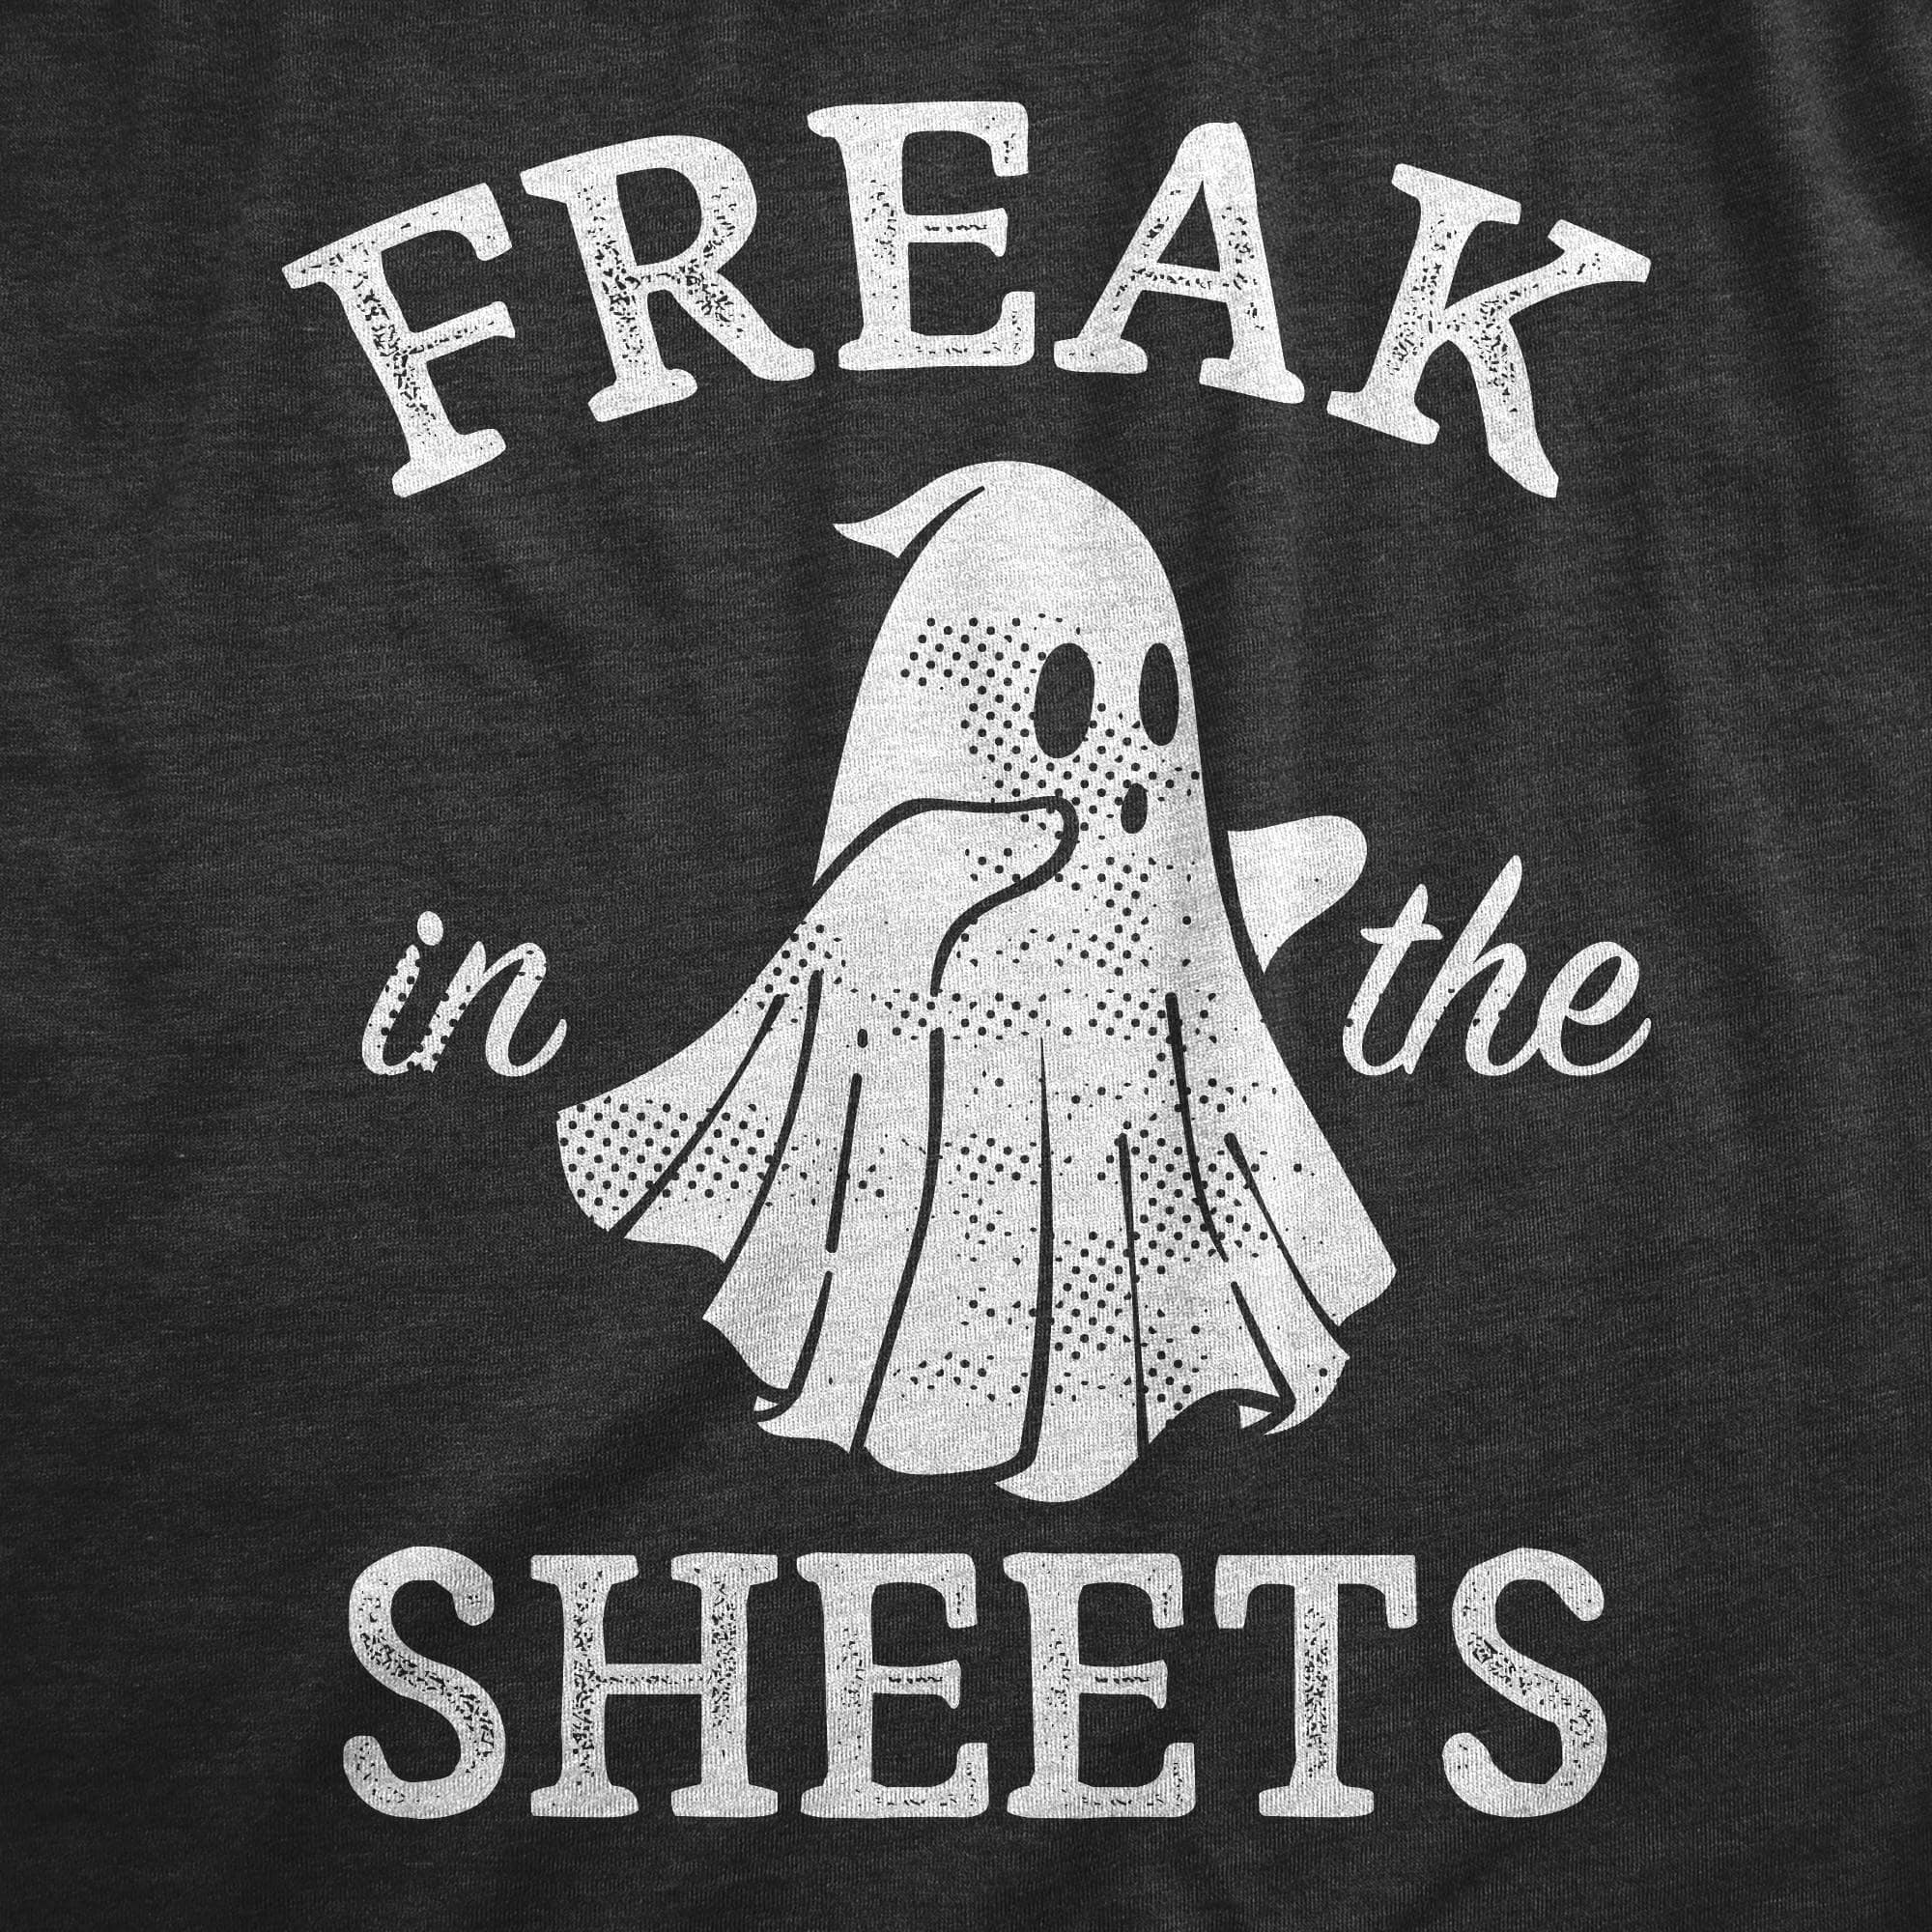 Freak In The Sheets Men's Tshirt  -  Crazy Dog T-Shirts